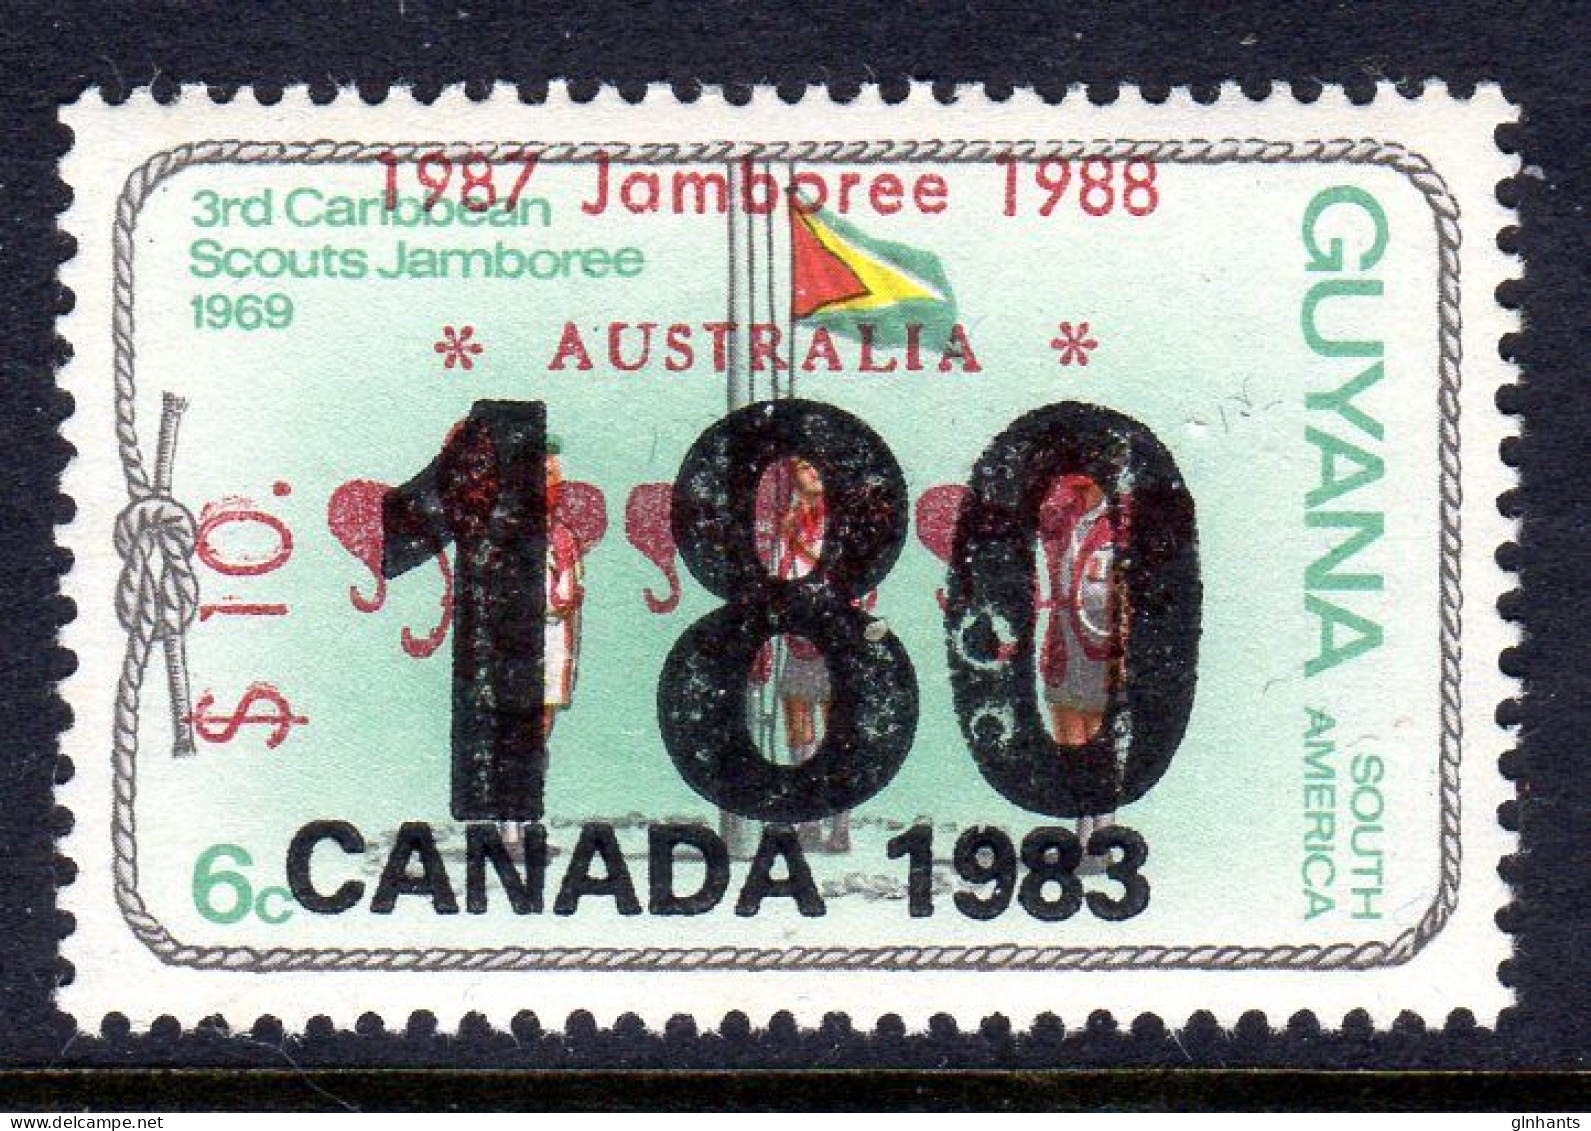 GUYANA - 1988 $10 ON 180 ON CANADA 1983 AUSTRALIA JAMBOREE OVERPRINT FINE MNH ** SG 2268 - Guyana (1966-...)